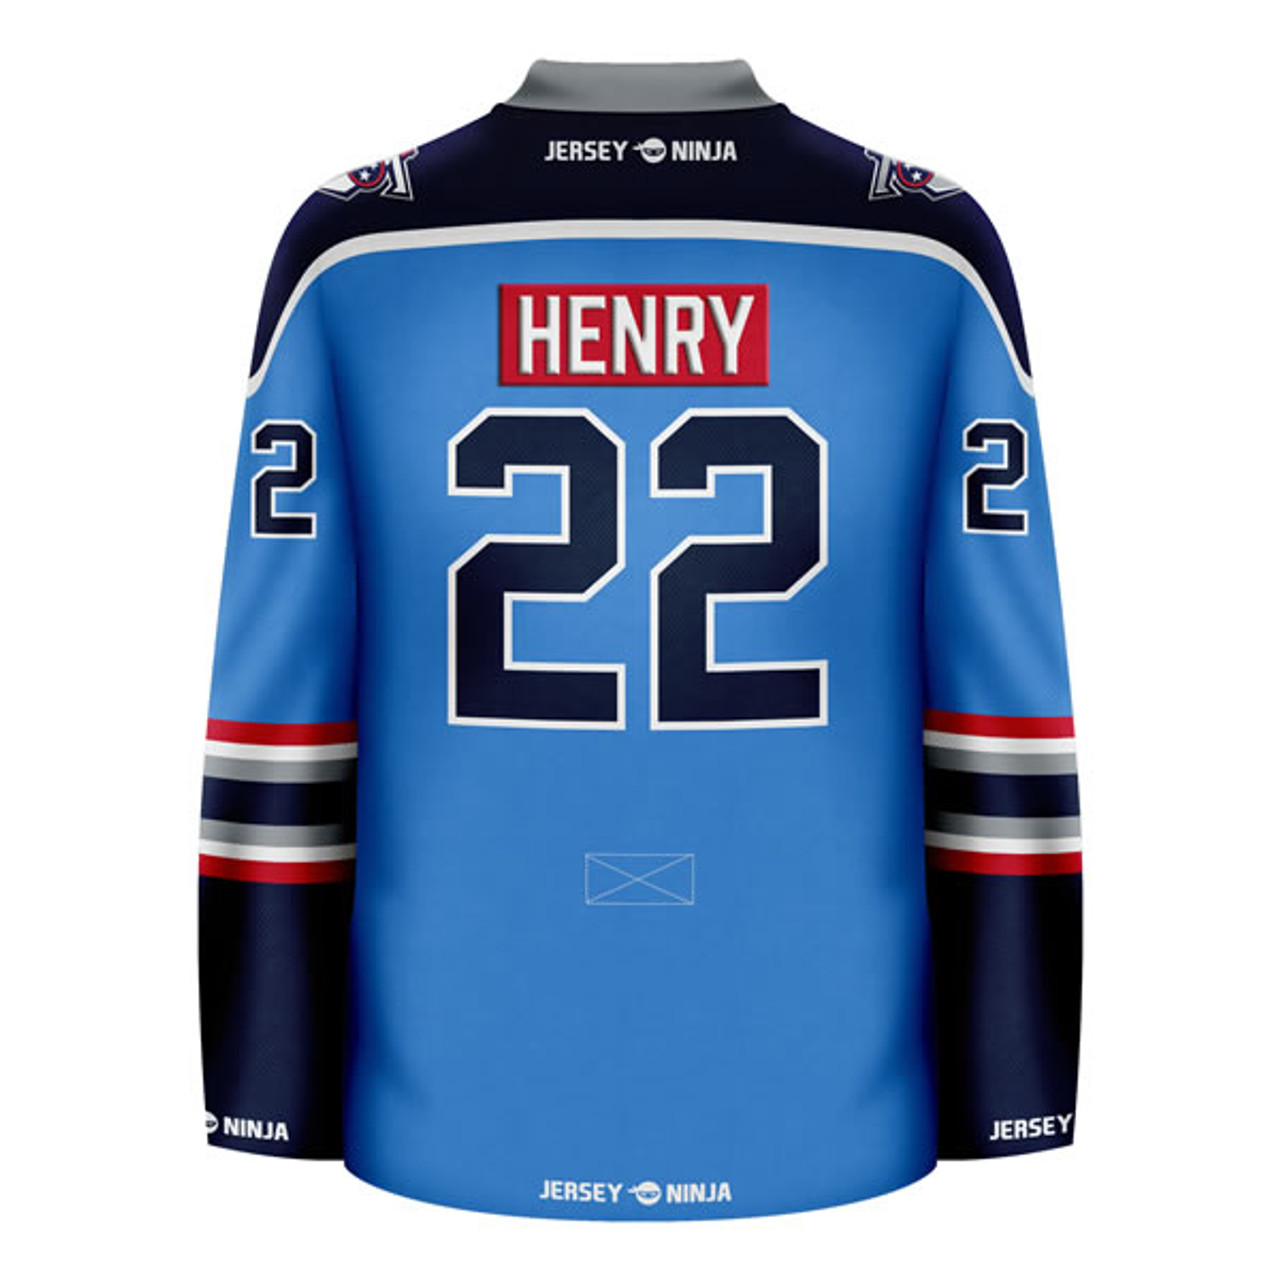 Derrick Henry Tennessee Titans Oilers Jersey light blue